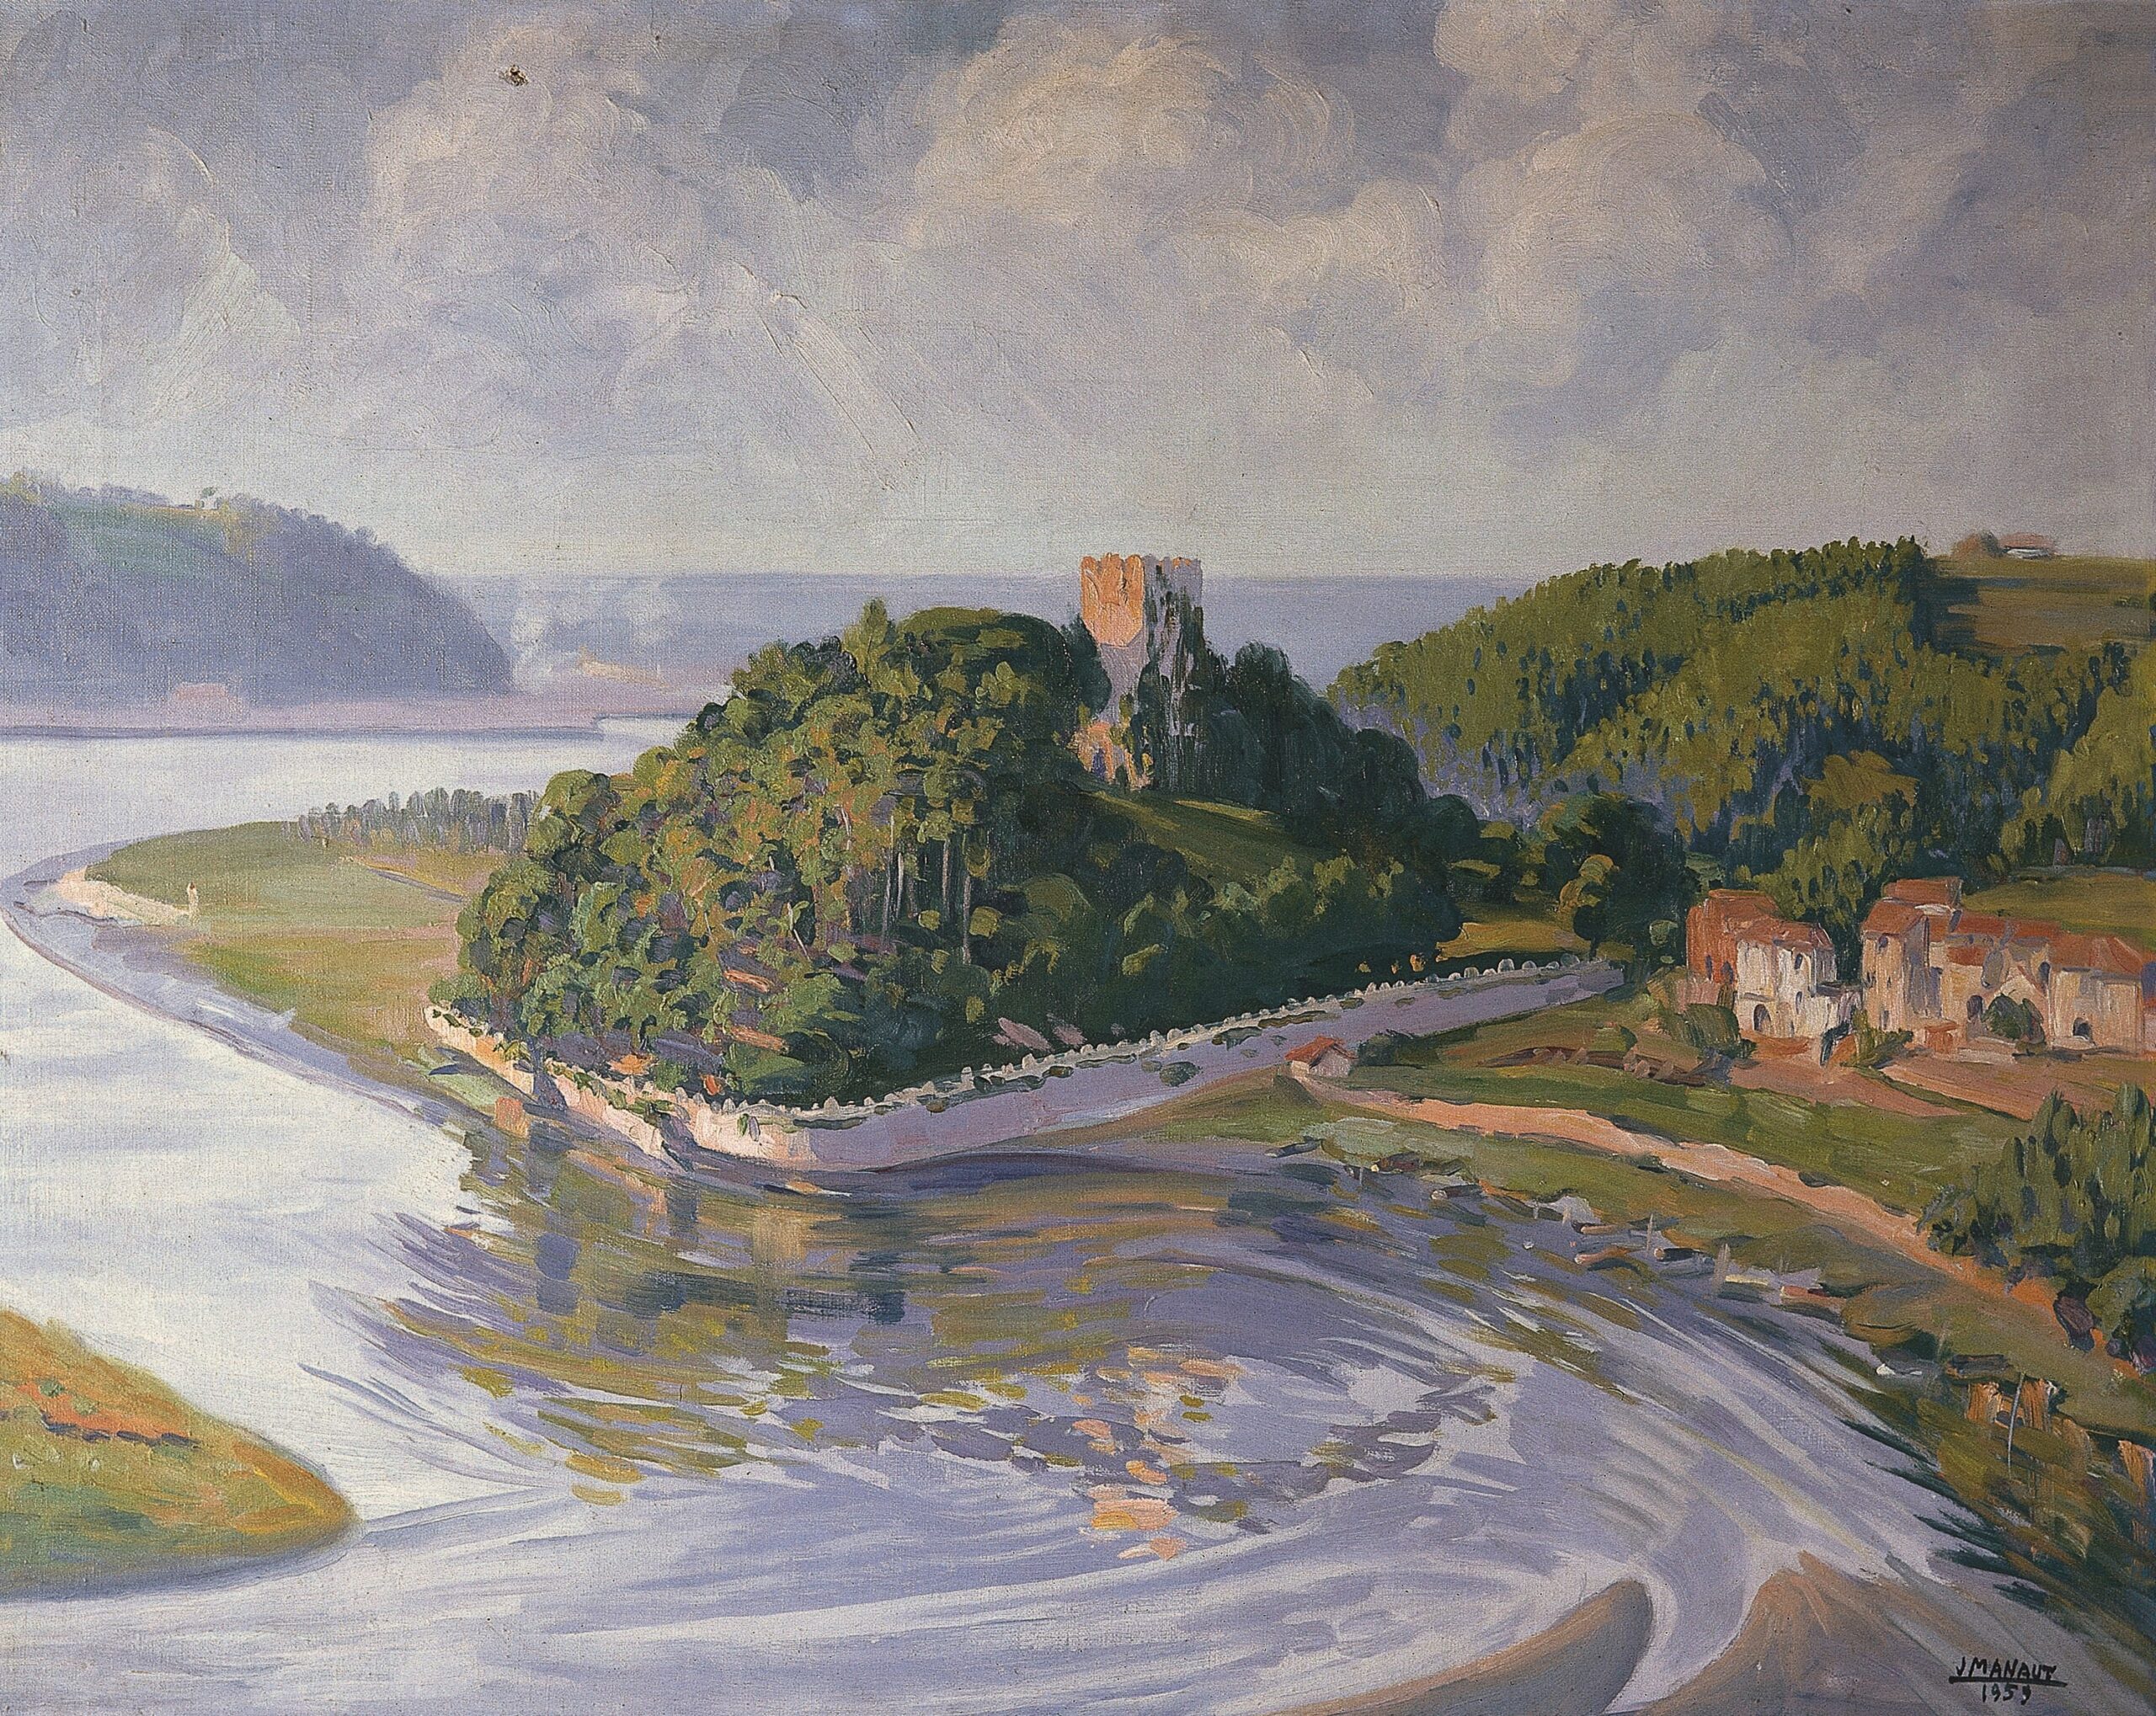 Pintura de José Manaut titulada San Esteban de Pravia; desembocadura del Nálon, Pravia (Asturias), 1959. Óleo sobre lienzo.